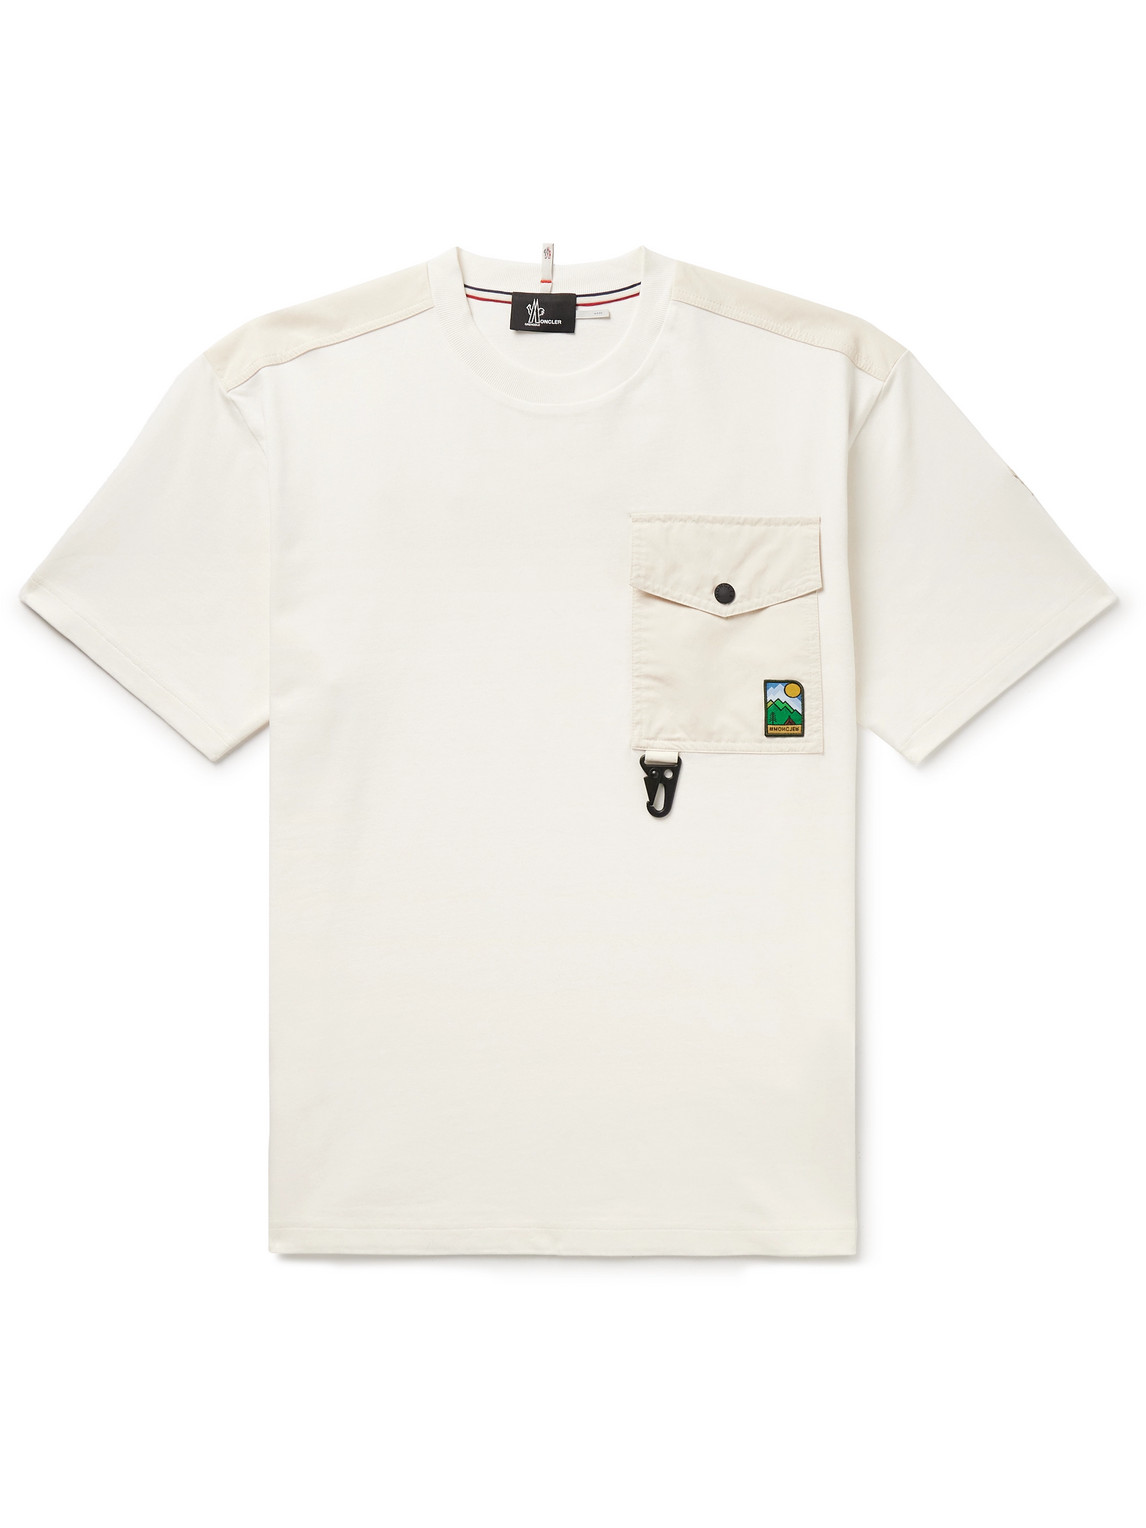 Moncler Grenoble - Logo-Appliquéd Shell-Trimmed Combed Cotton-Jersey T-Shirt - Men - White - M von Moncler Grenoble